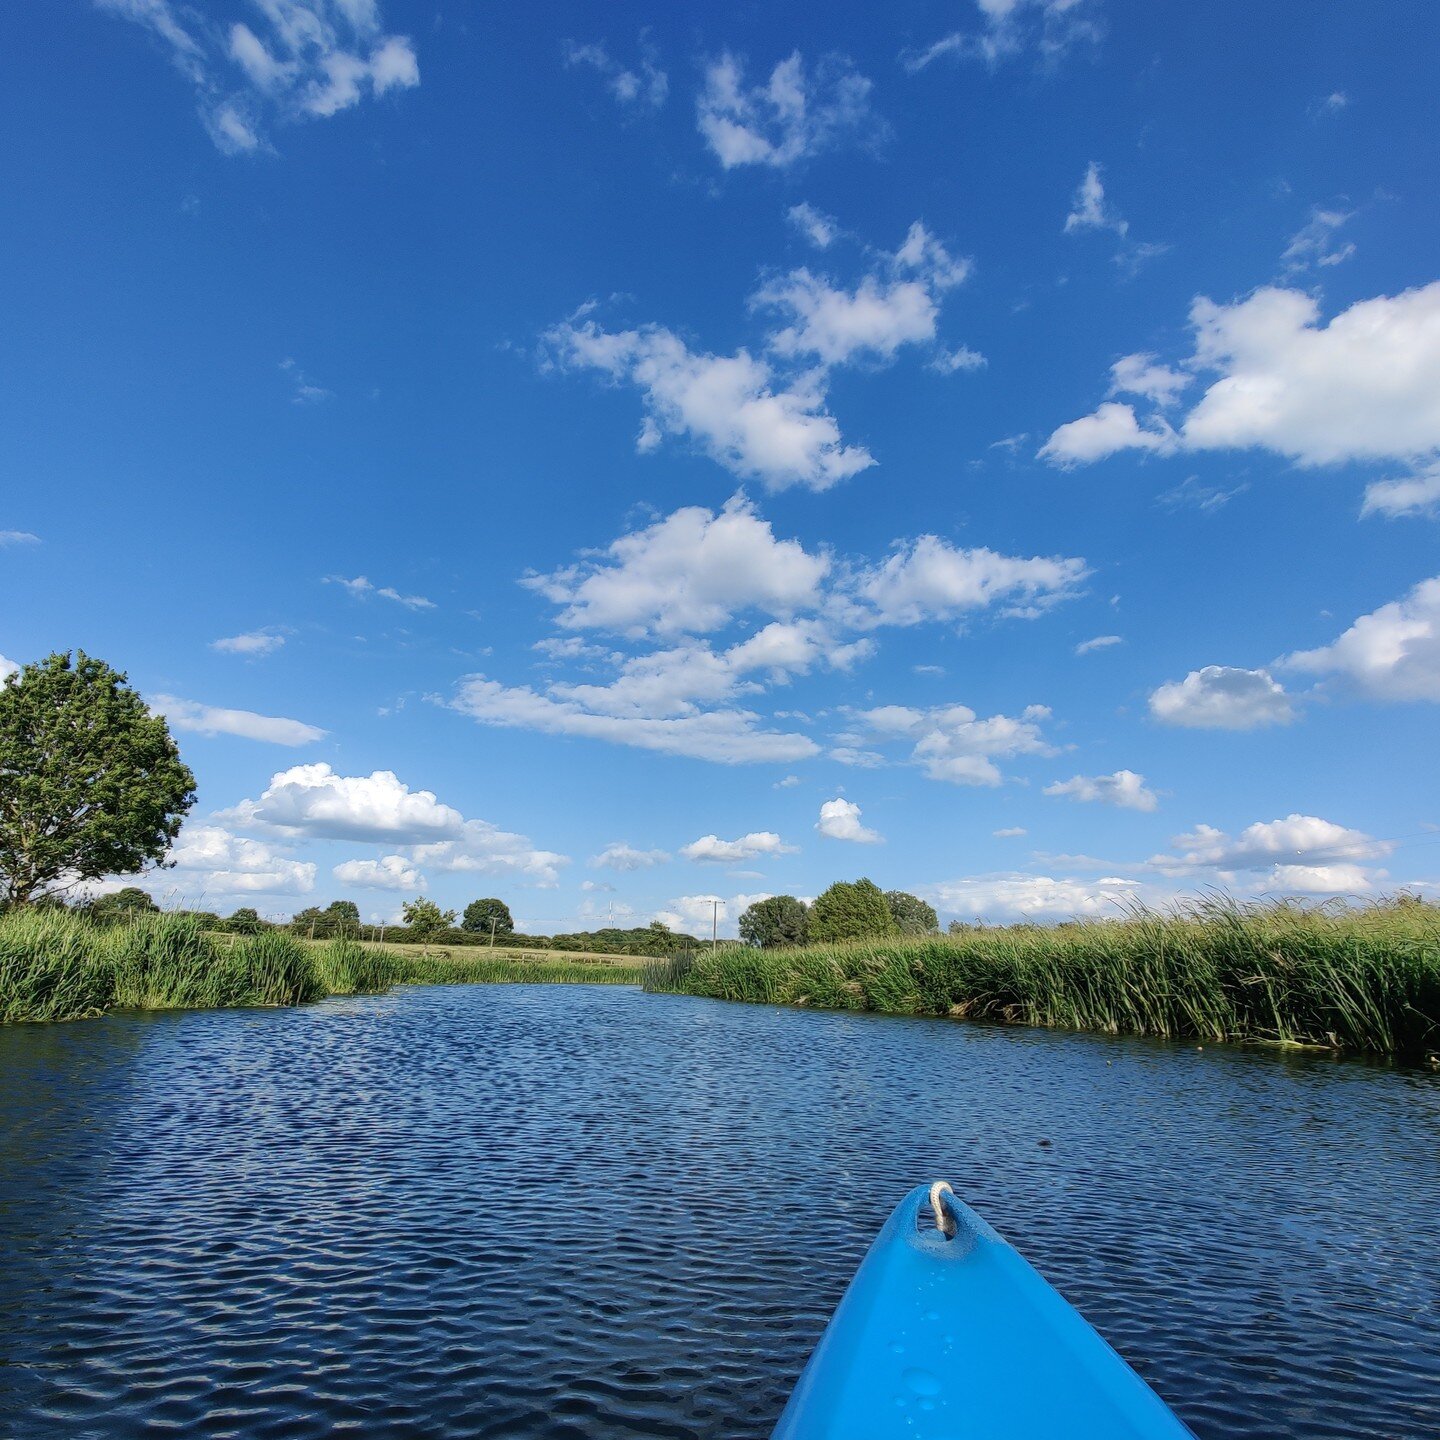 ☀️ + 🛶 = perfect day!

#kayaking #kayakingfun #riverstour #summersun #summerfun #sudbury #suffolk #essex